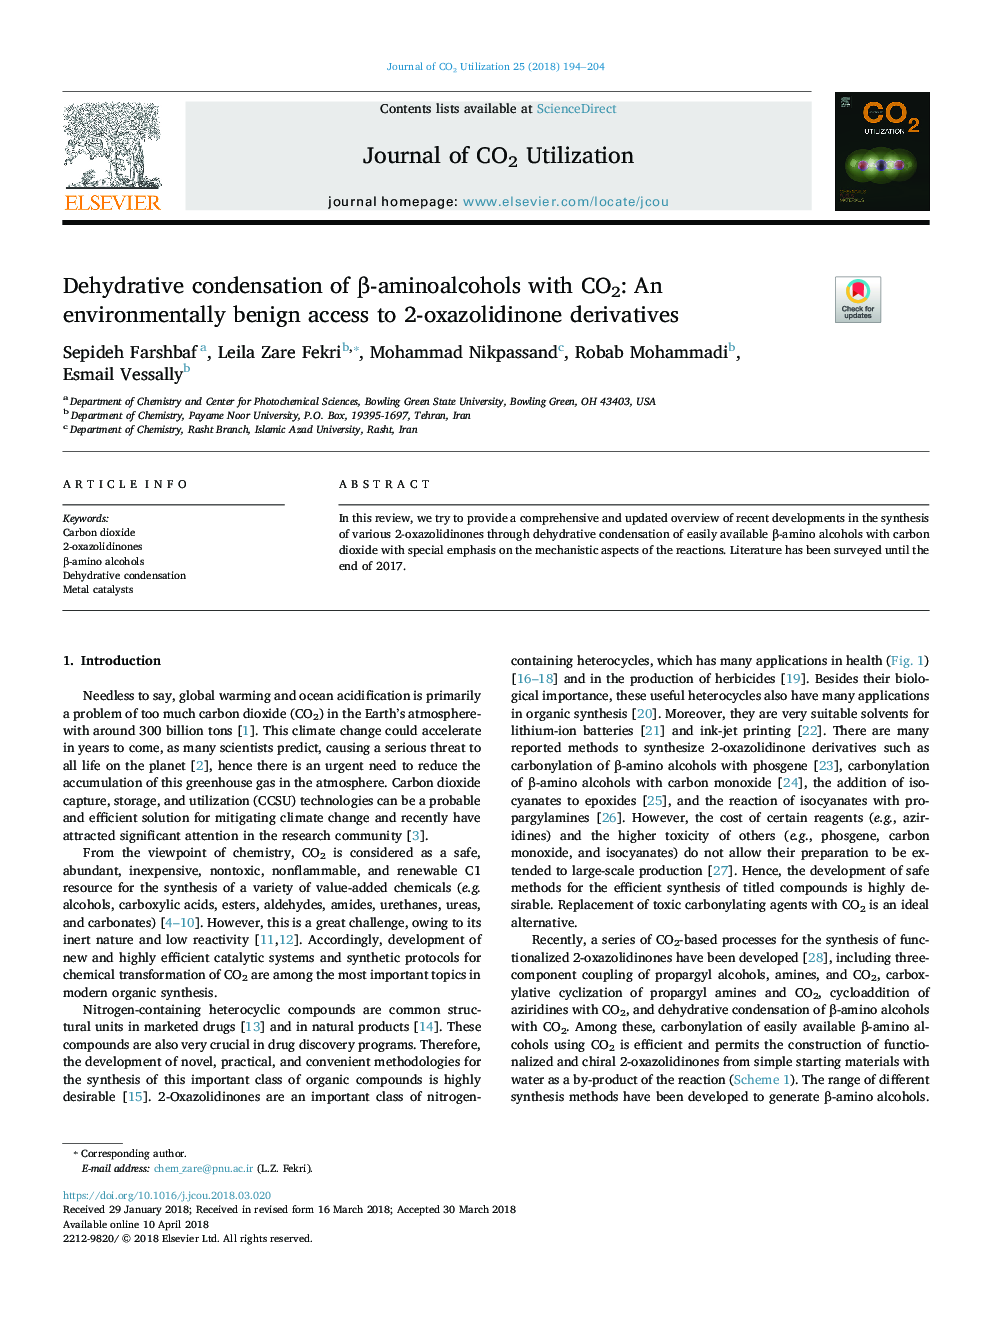 Dehydrative condensation of Î²-aminoalcohols with CO2: An environmentally benign access to 2-oxazolidinone derivatives